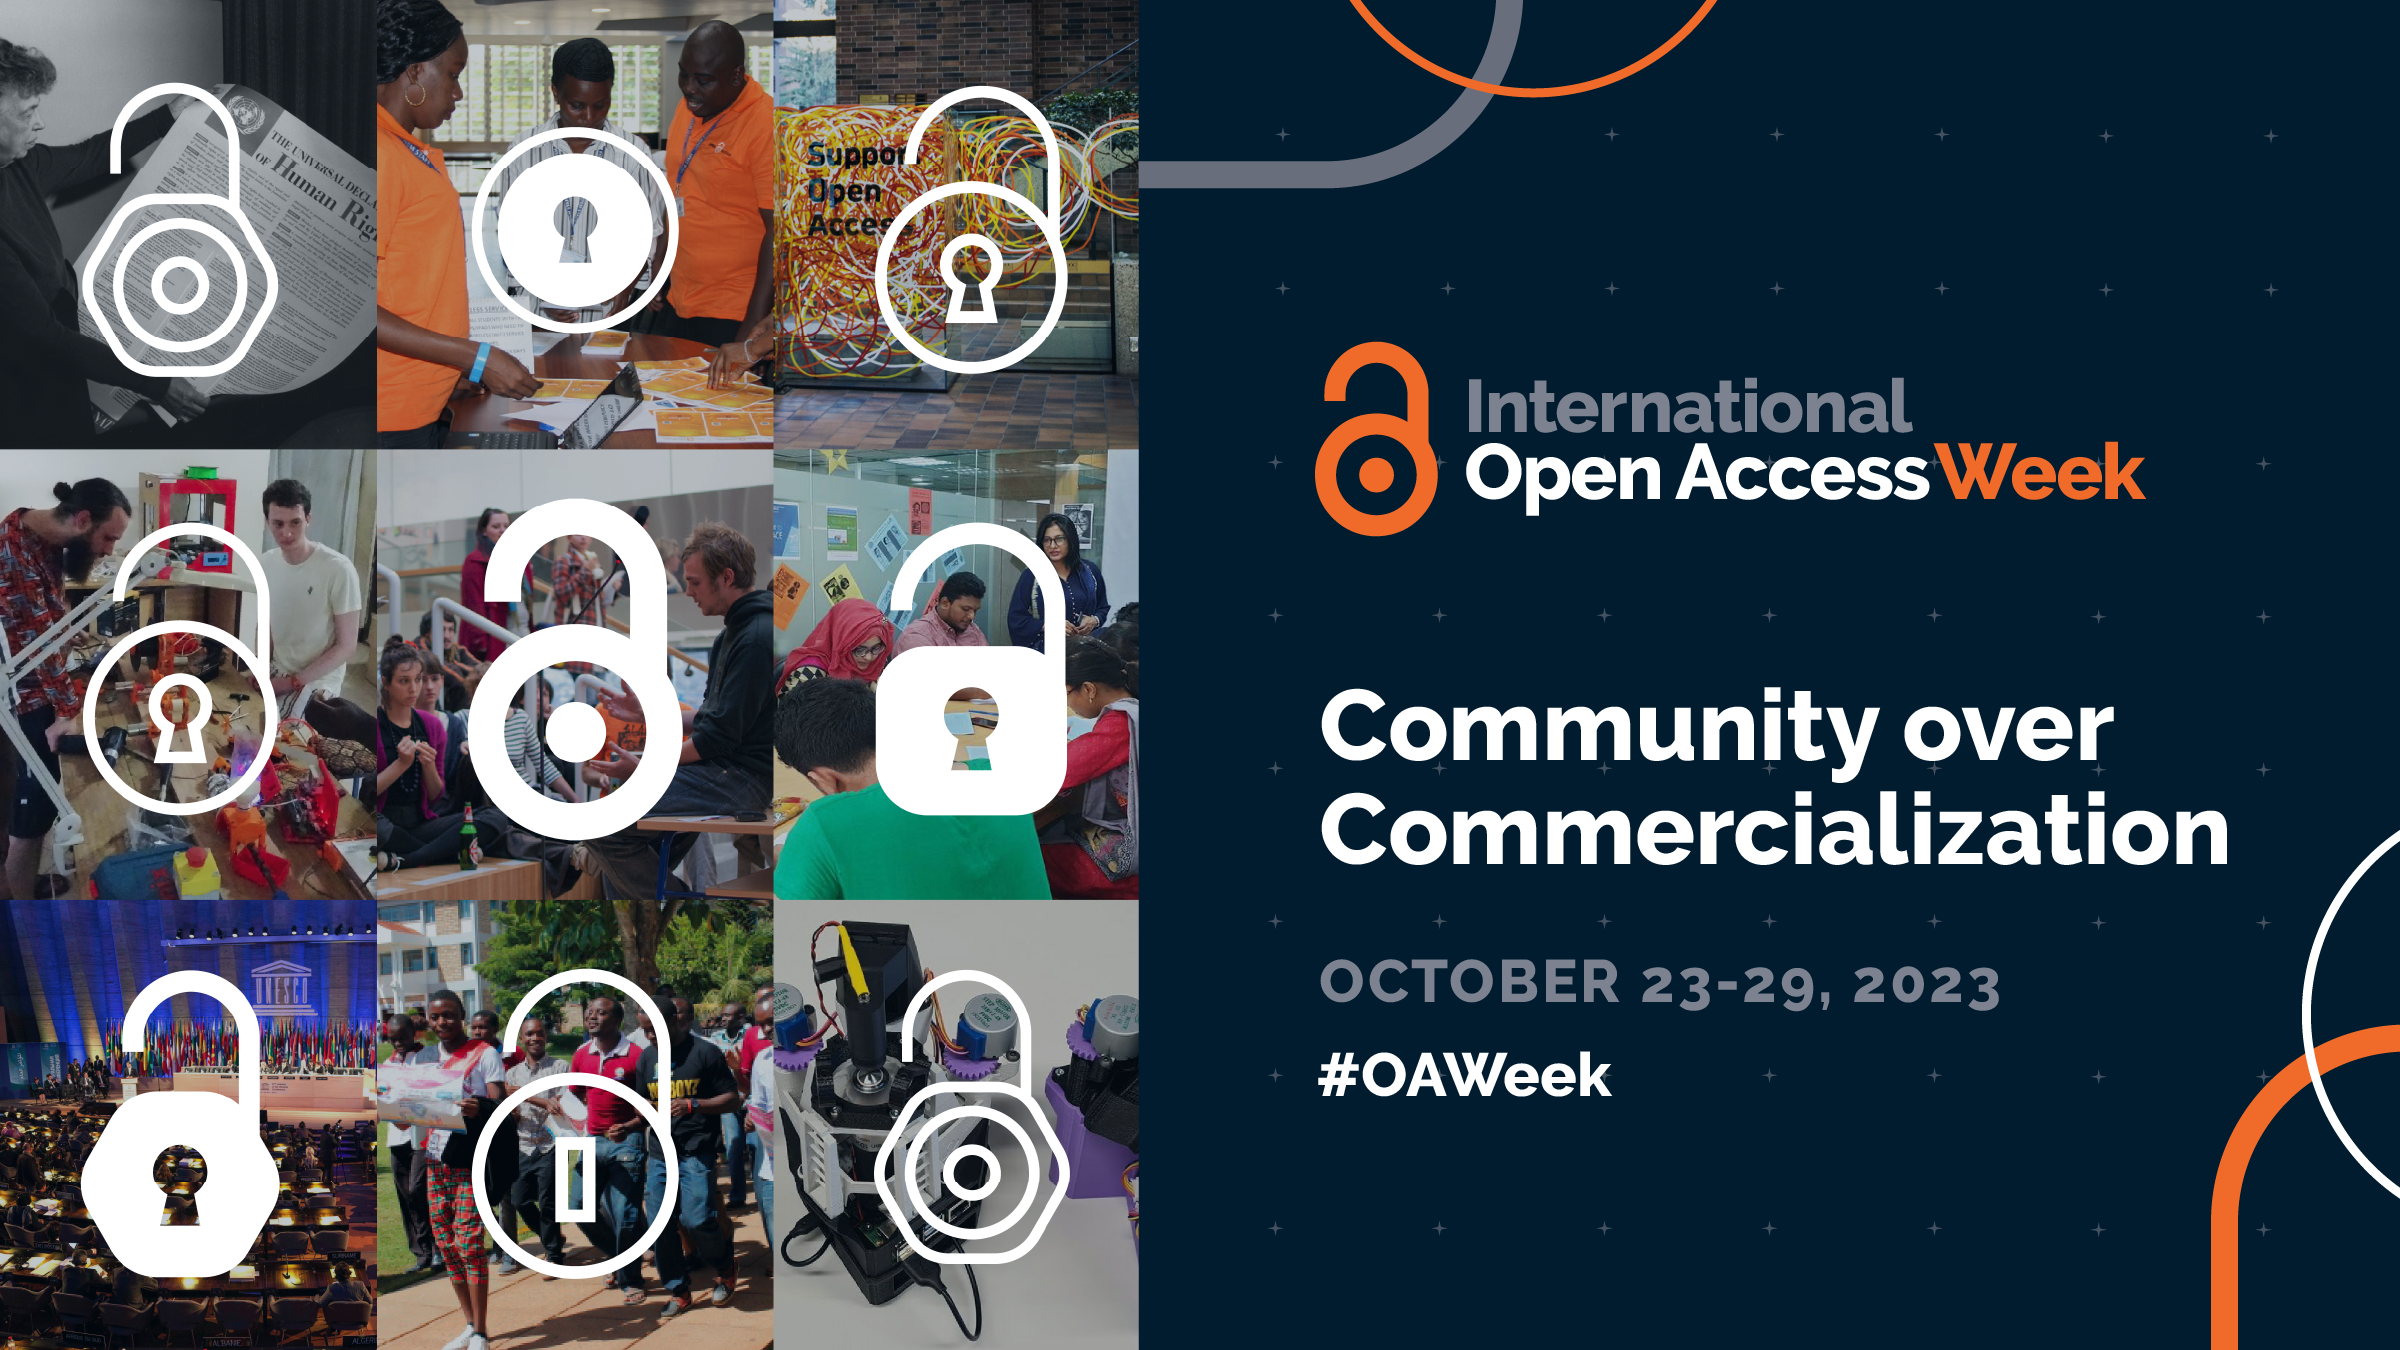 International Open Access Week "Community over Commercialization", October 23-29, 2023, #OAWeek.